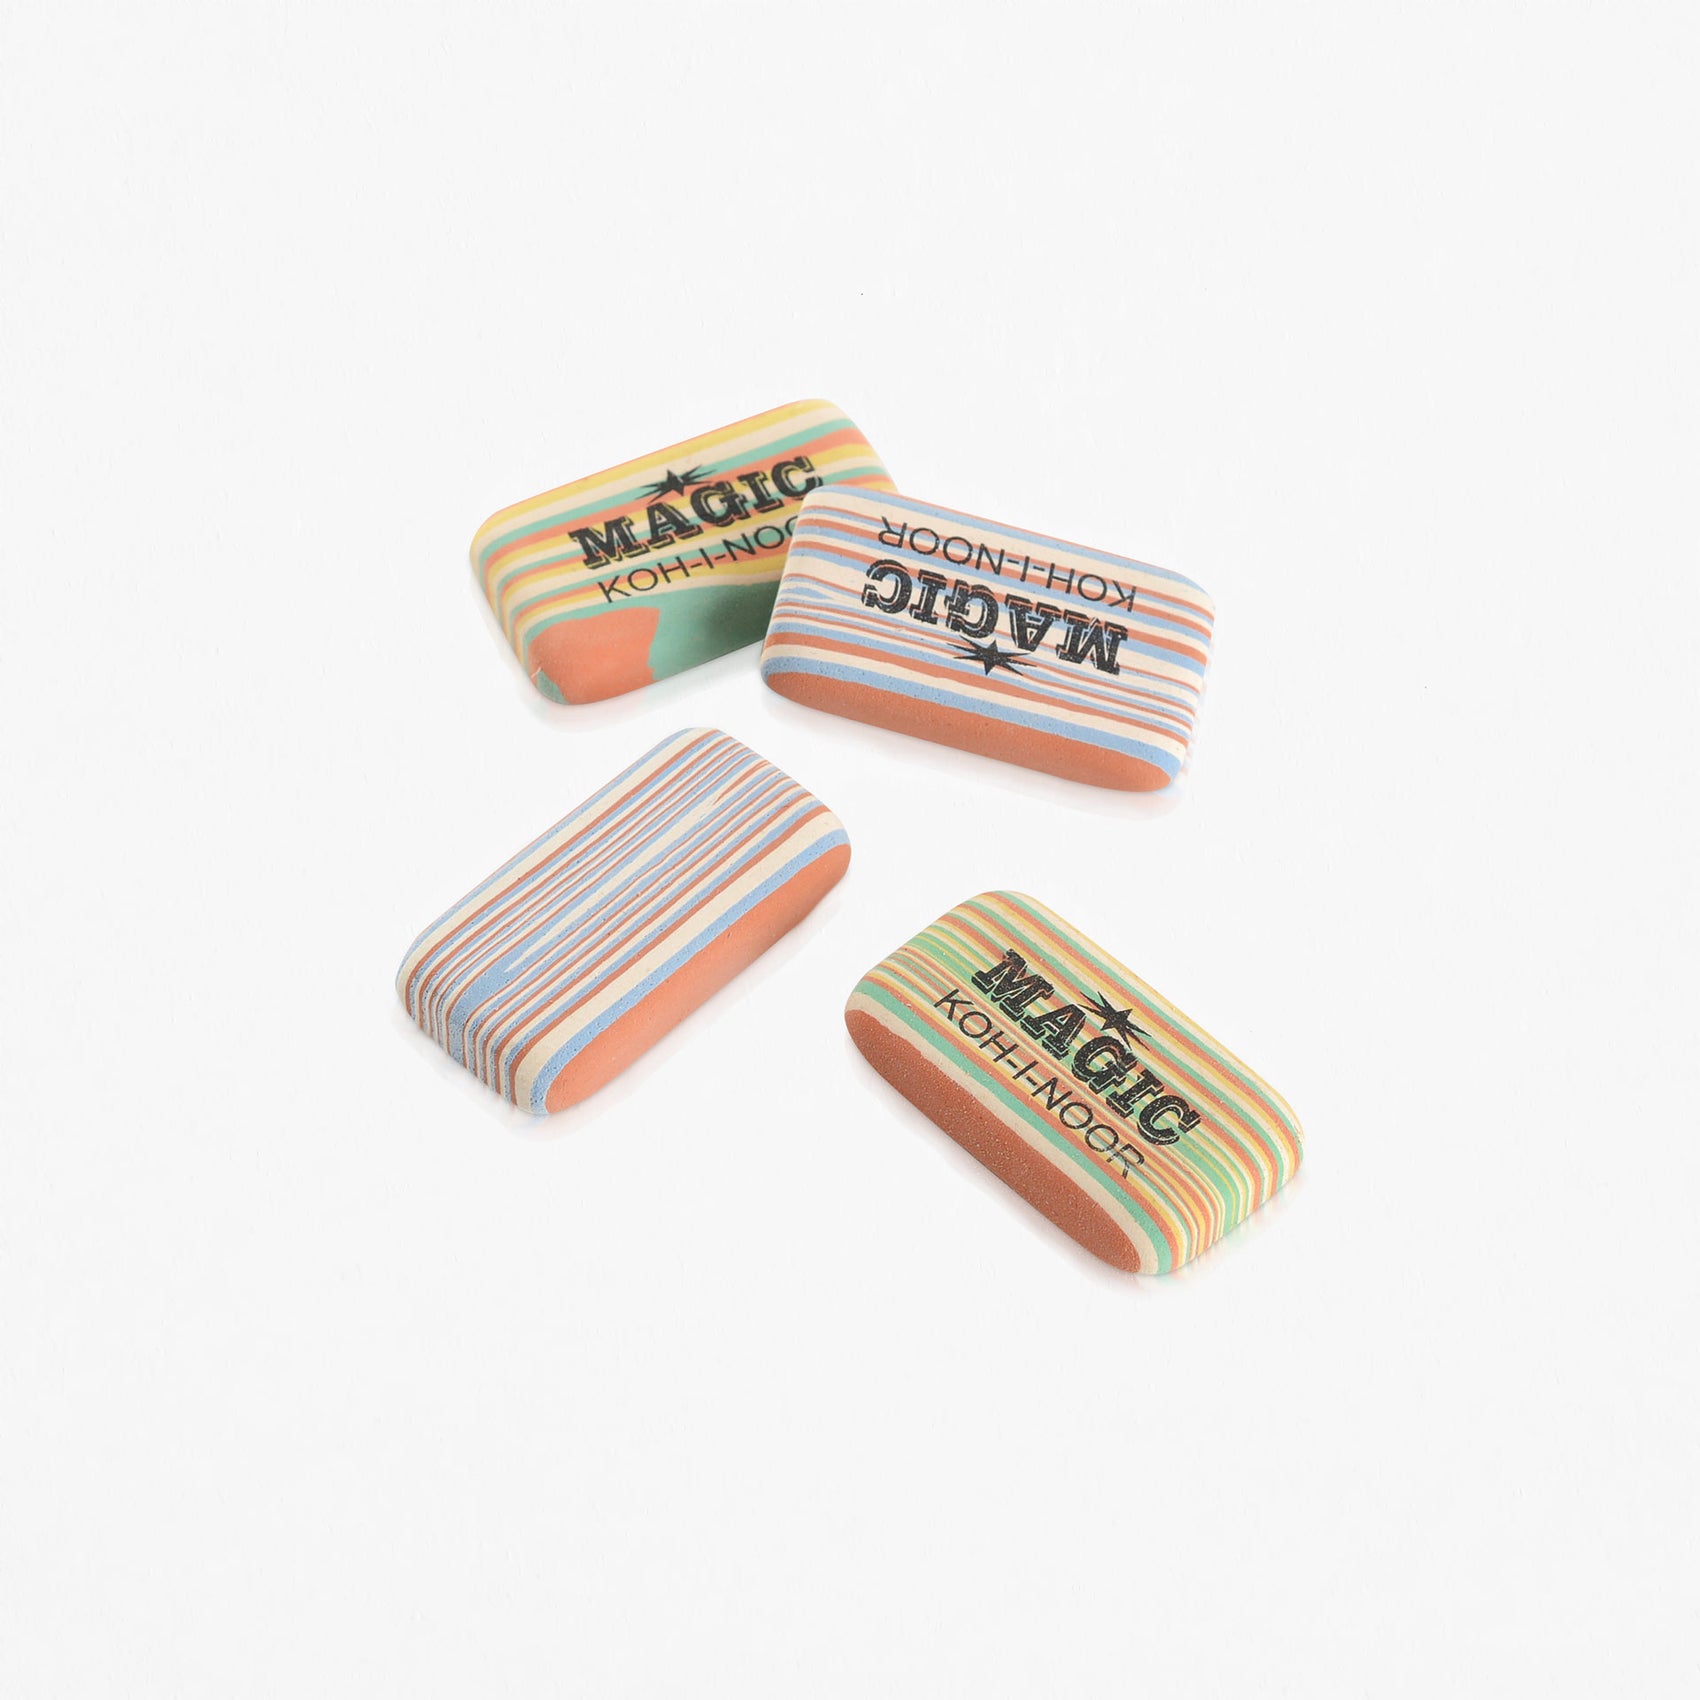 Koh-I-Noor Magic Erasers